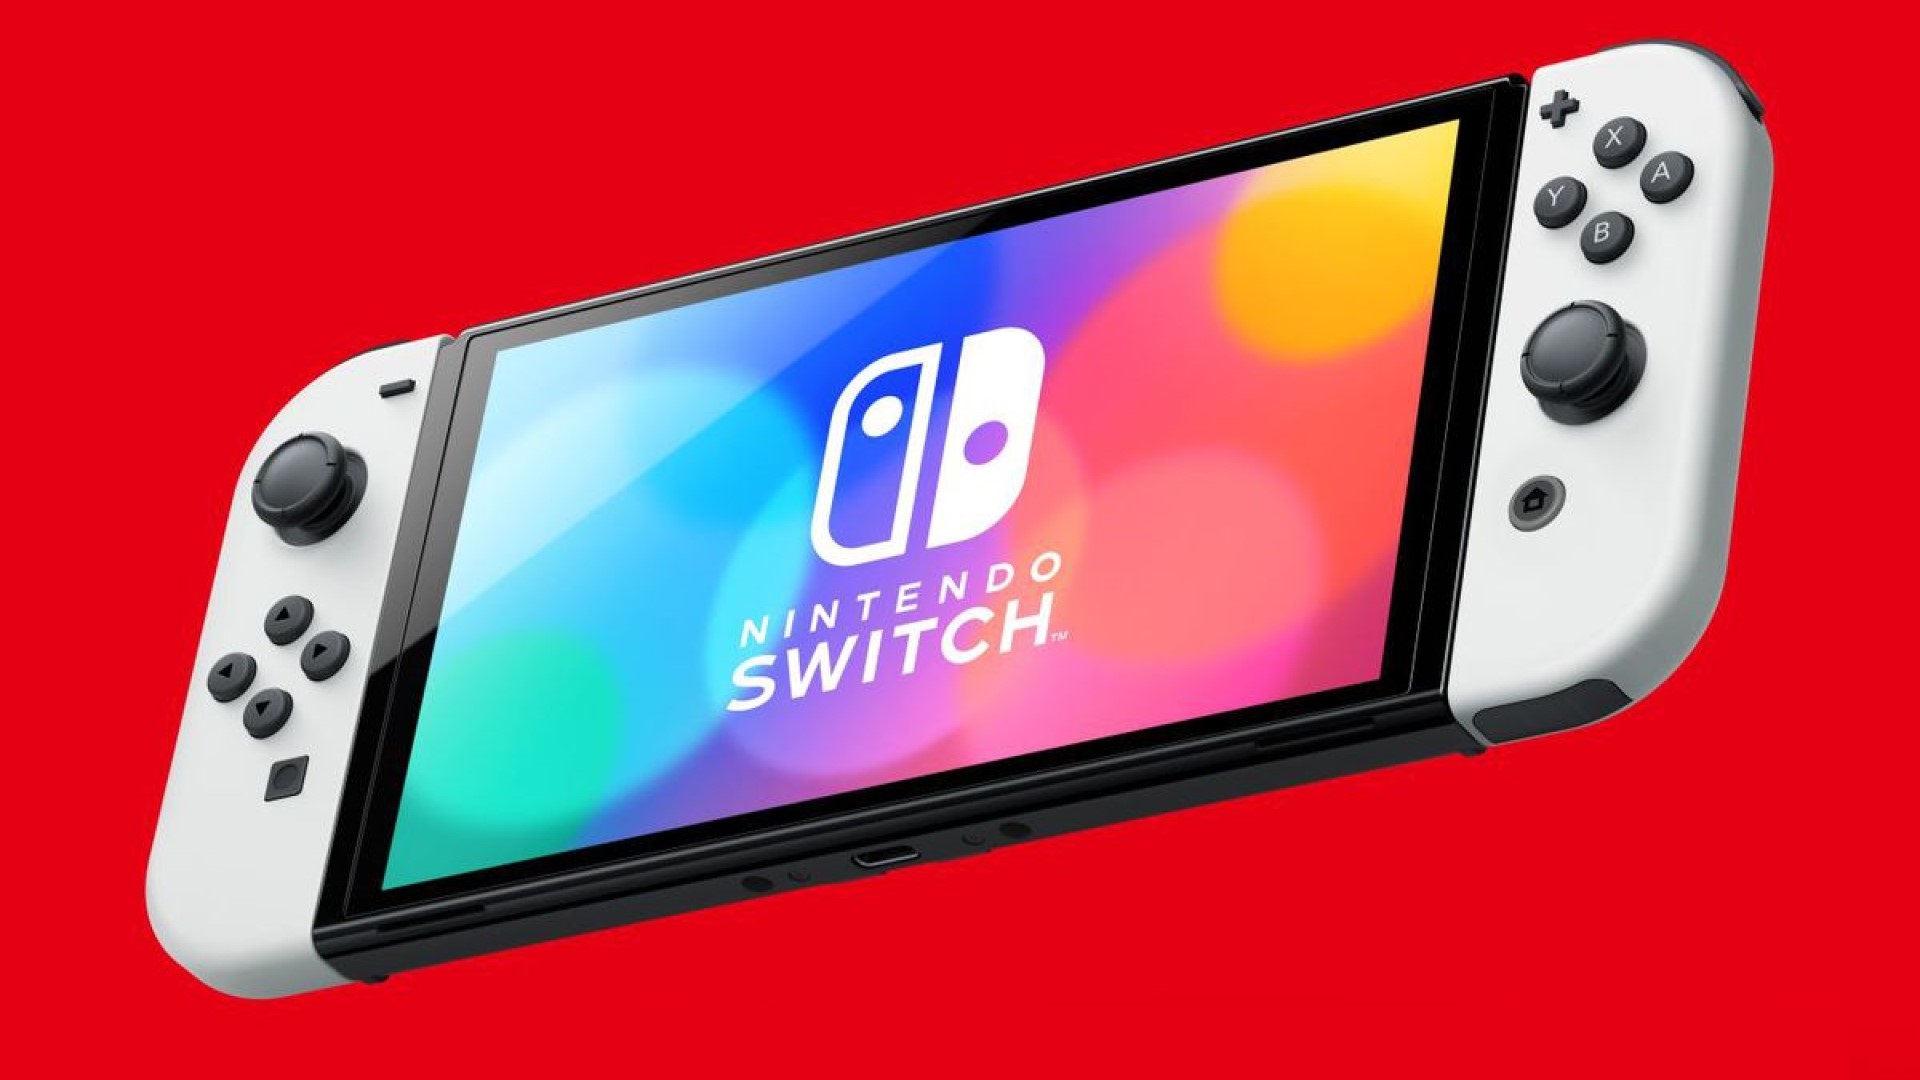 Nintendo Switch Has Sold 139.36 Million Units Worldwide